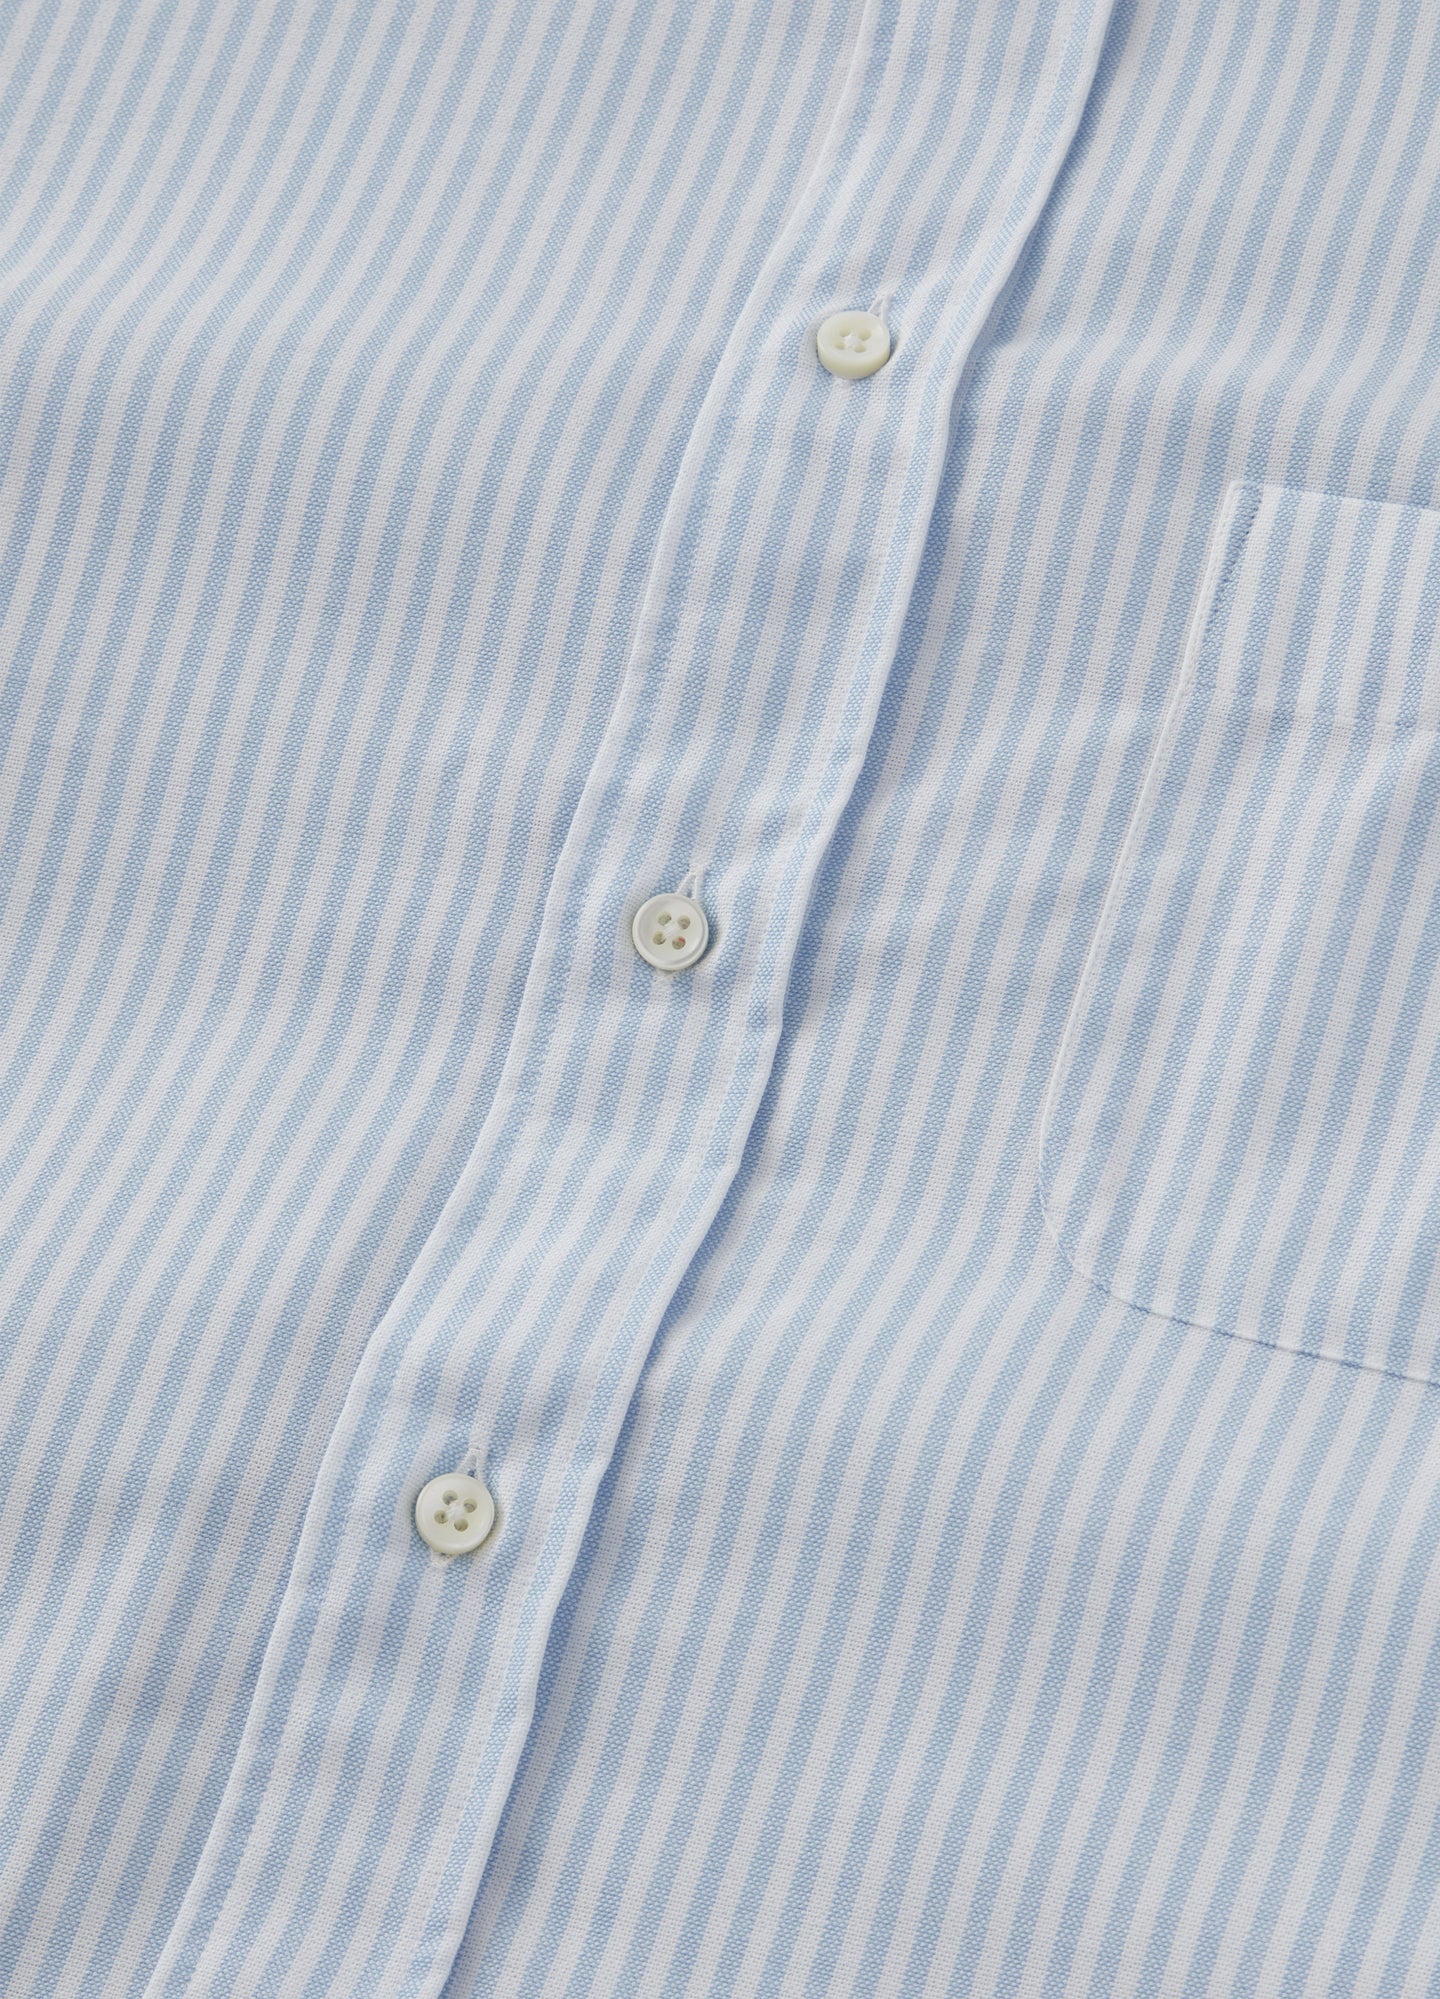 Ferdinand Button Down Shirt - Blue/White Berg & Berg